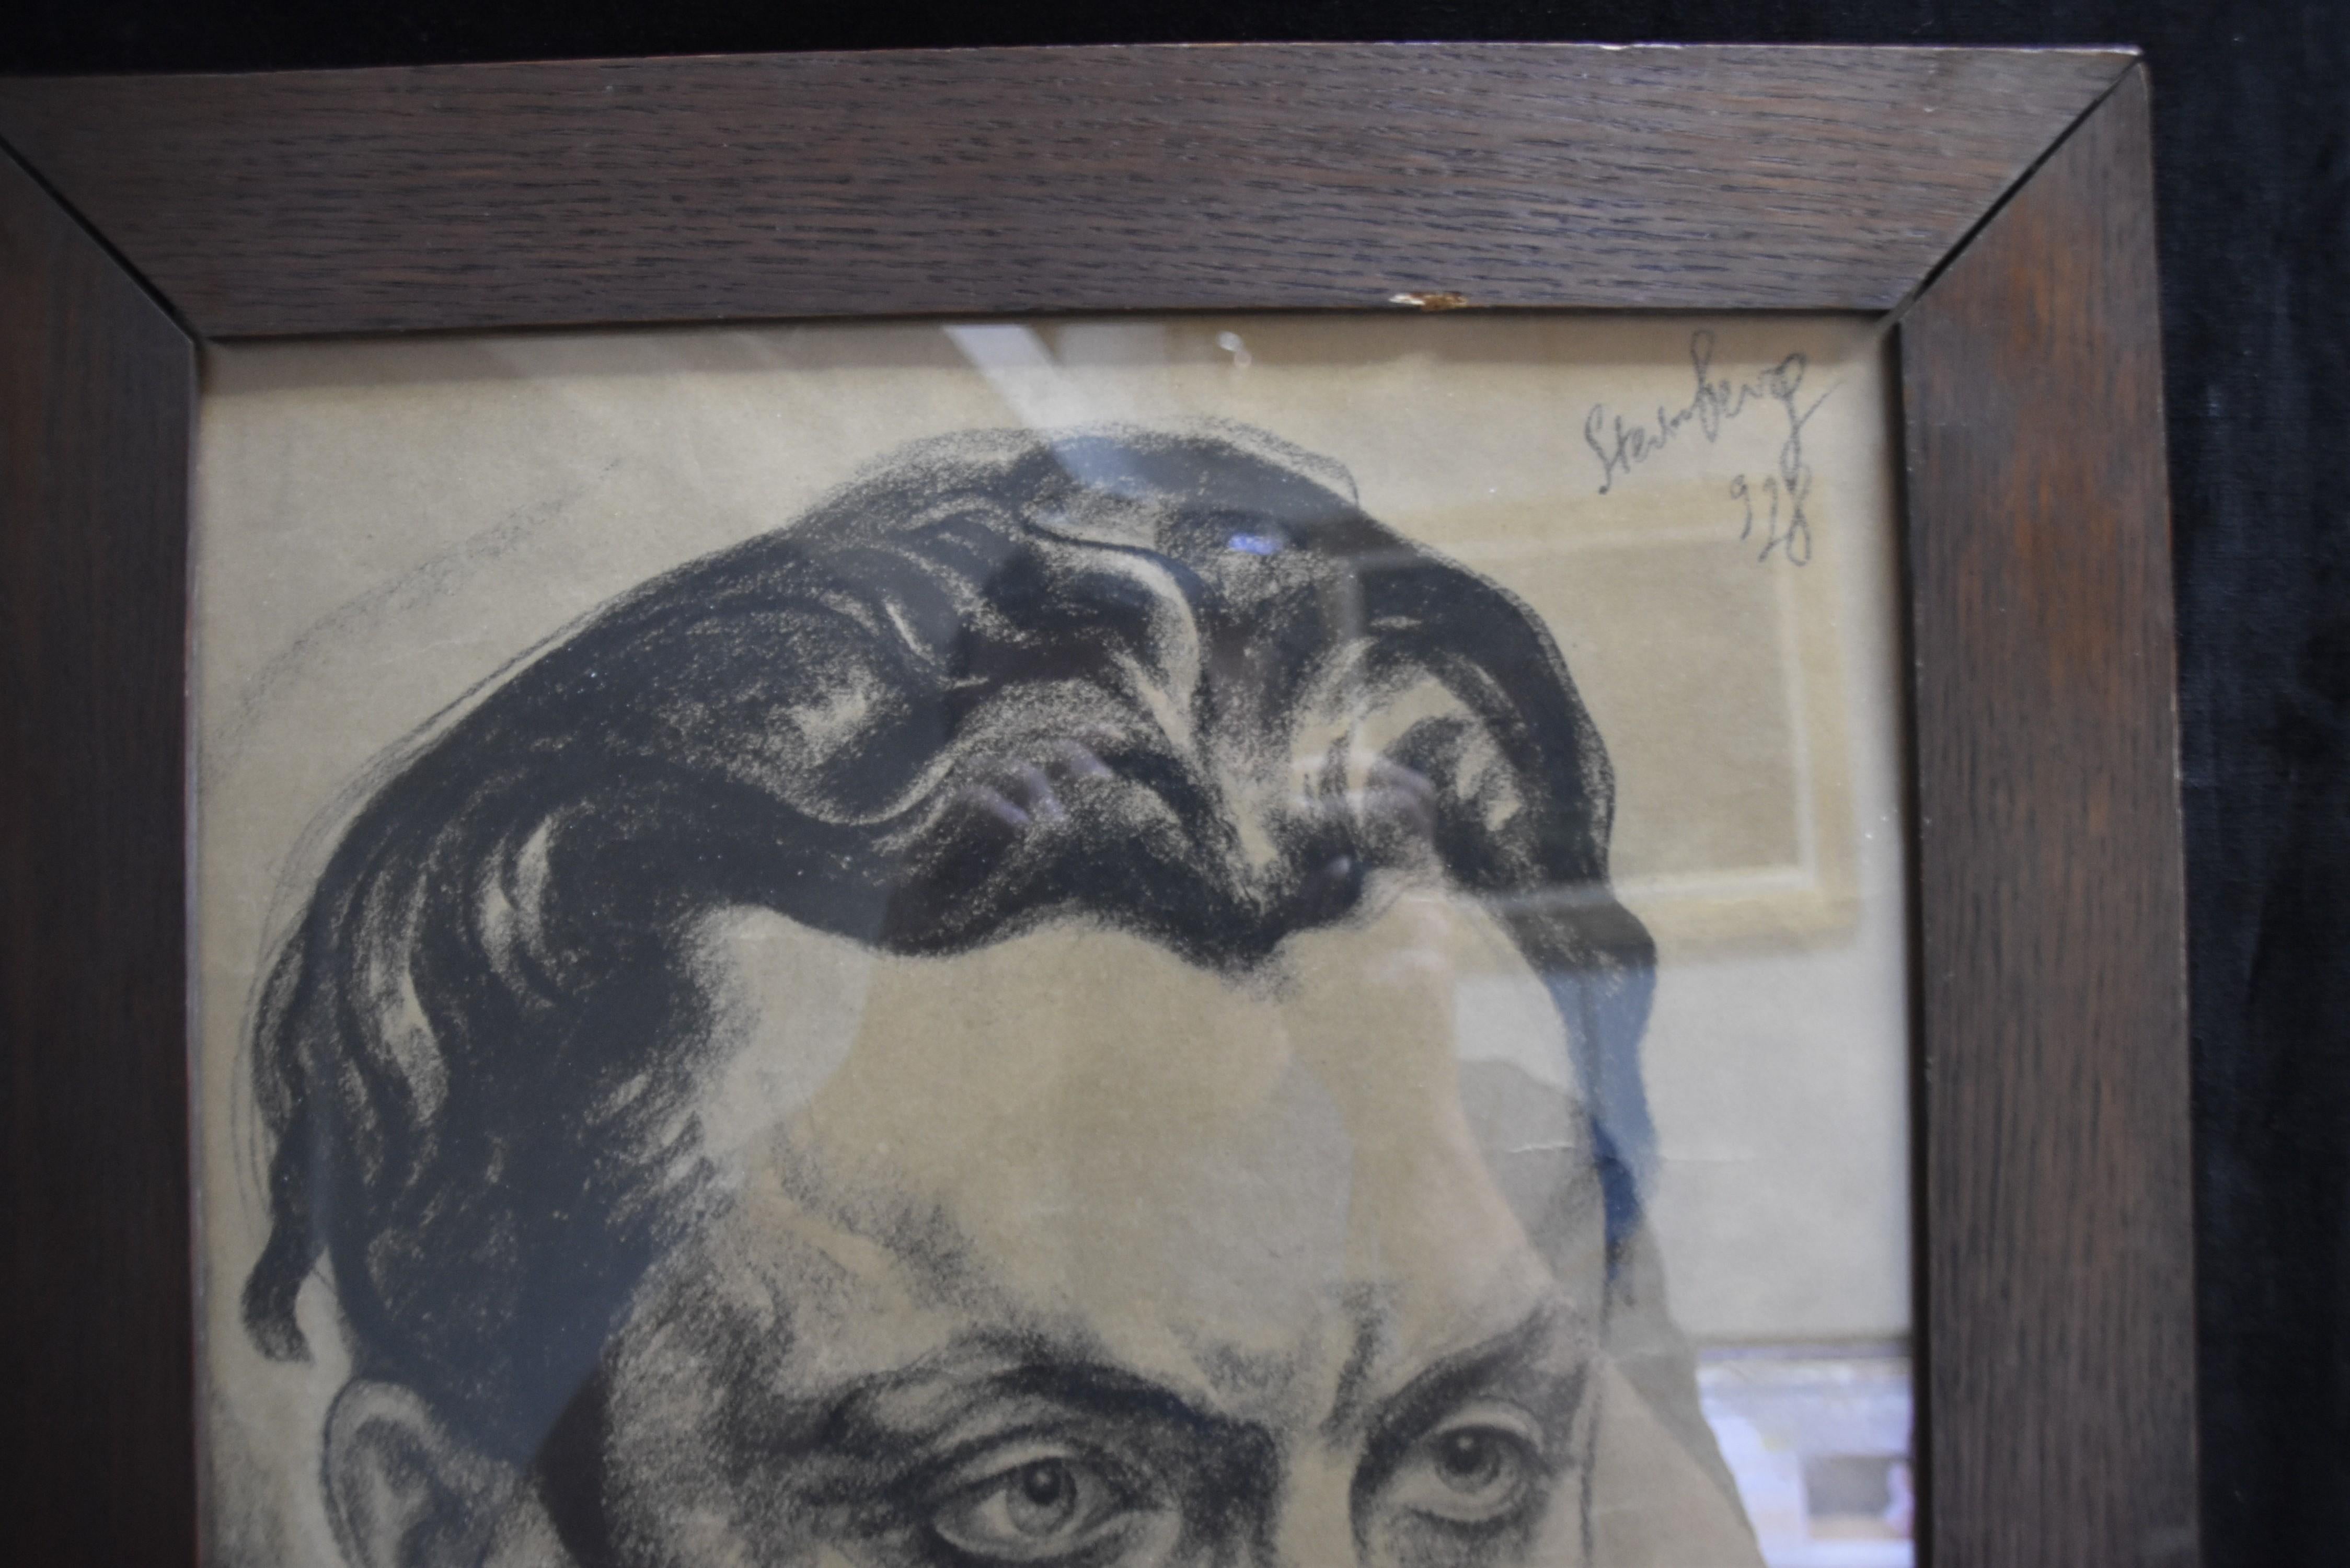 Nicolas Sternberg (1902-1960)
Portrait of a man, 1928
Black chalk on paper
49 x 30 cm
Signed 